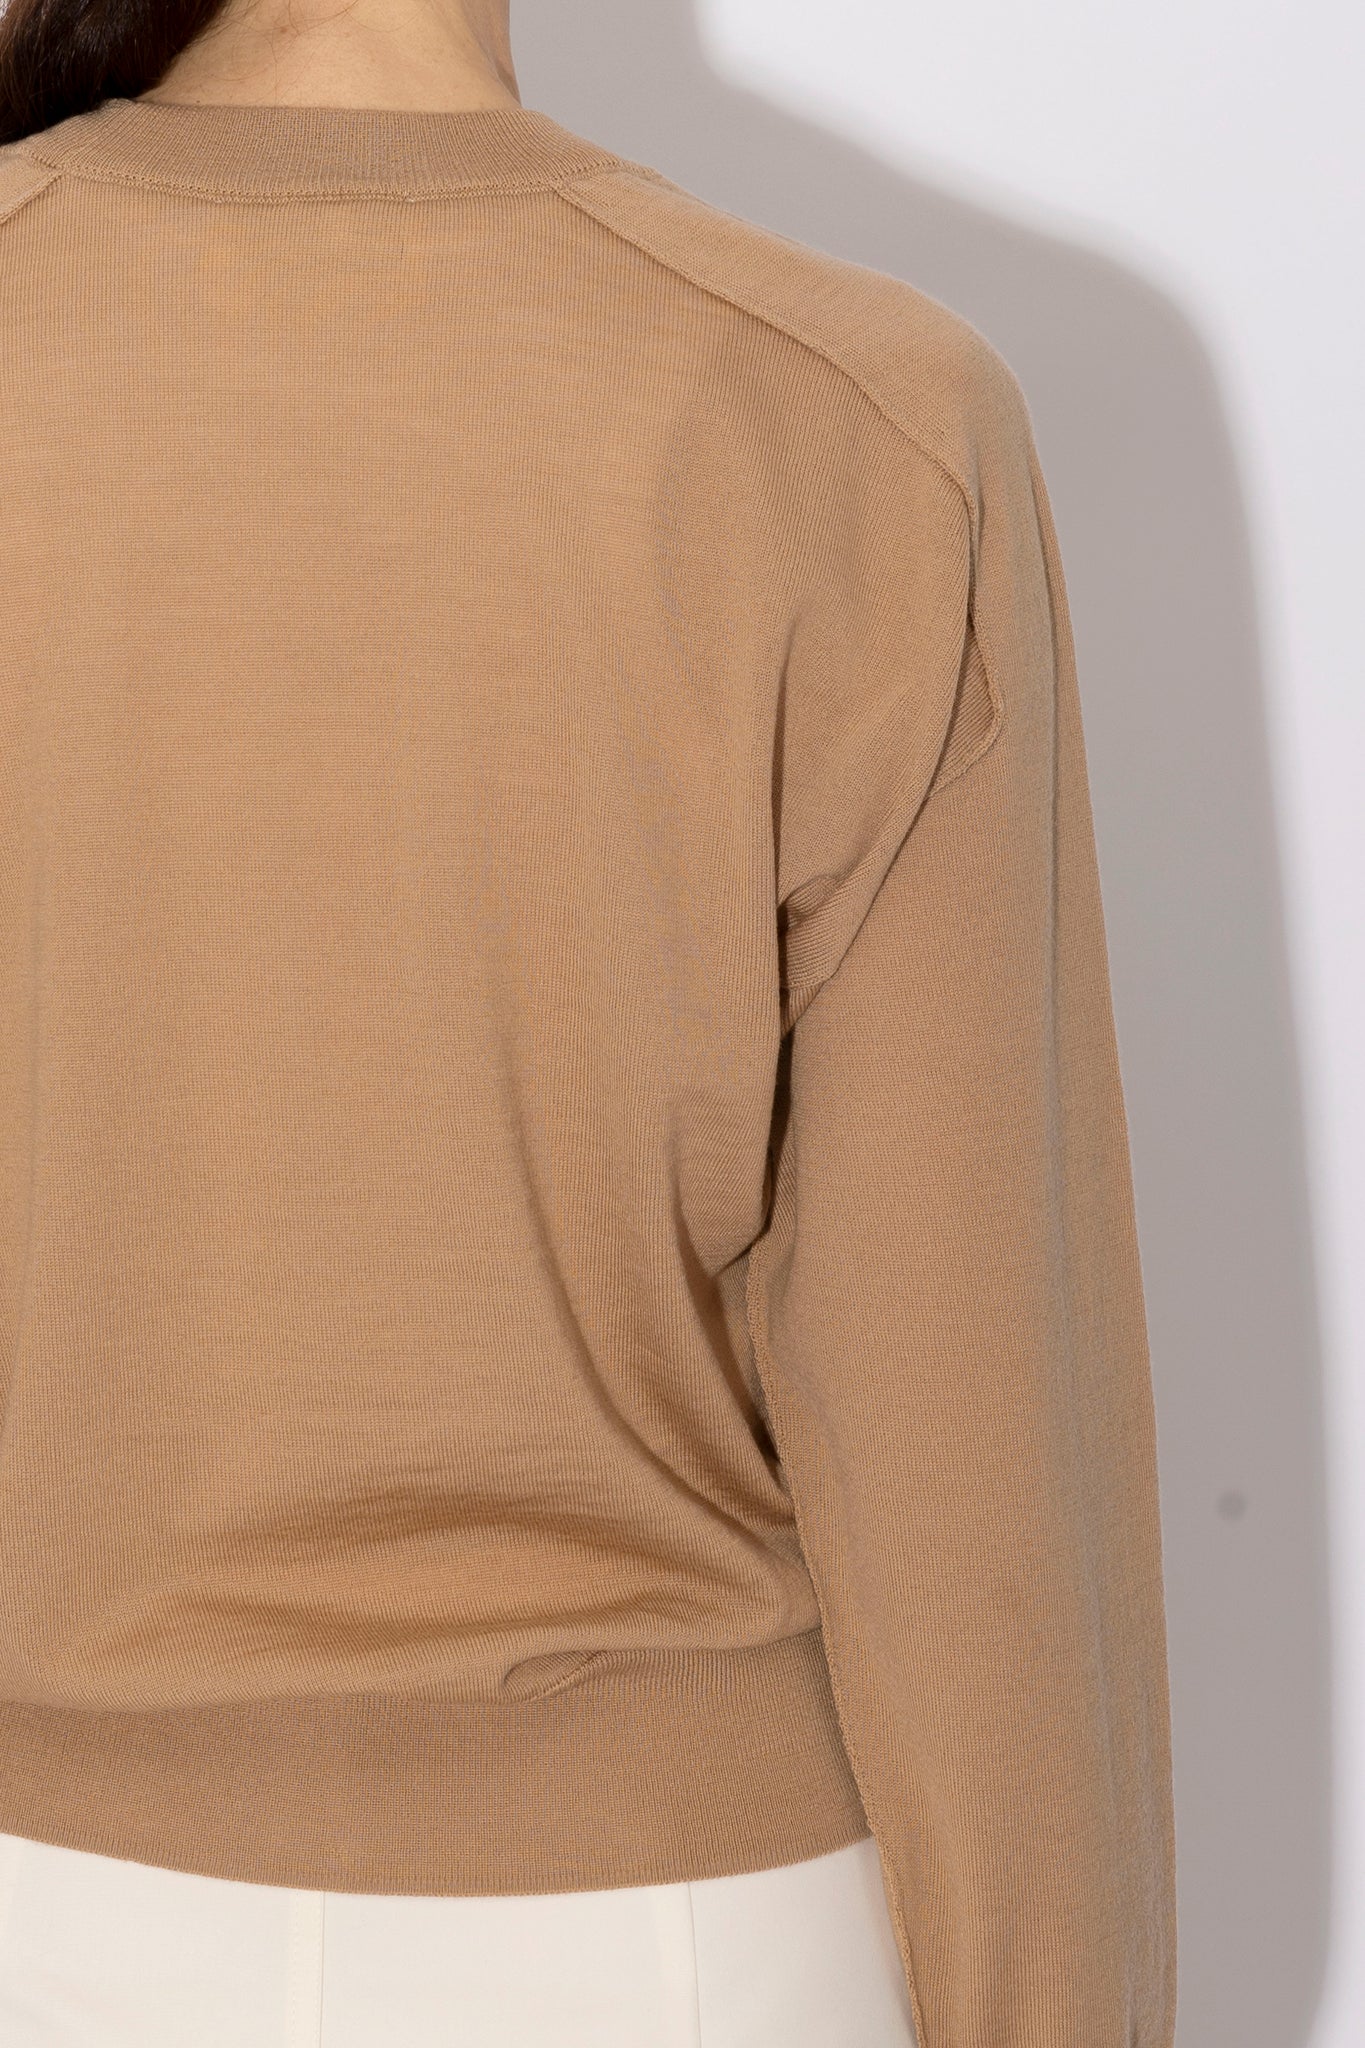 KORY pullover | LATTE BEIGE